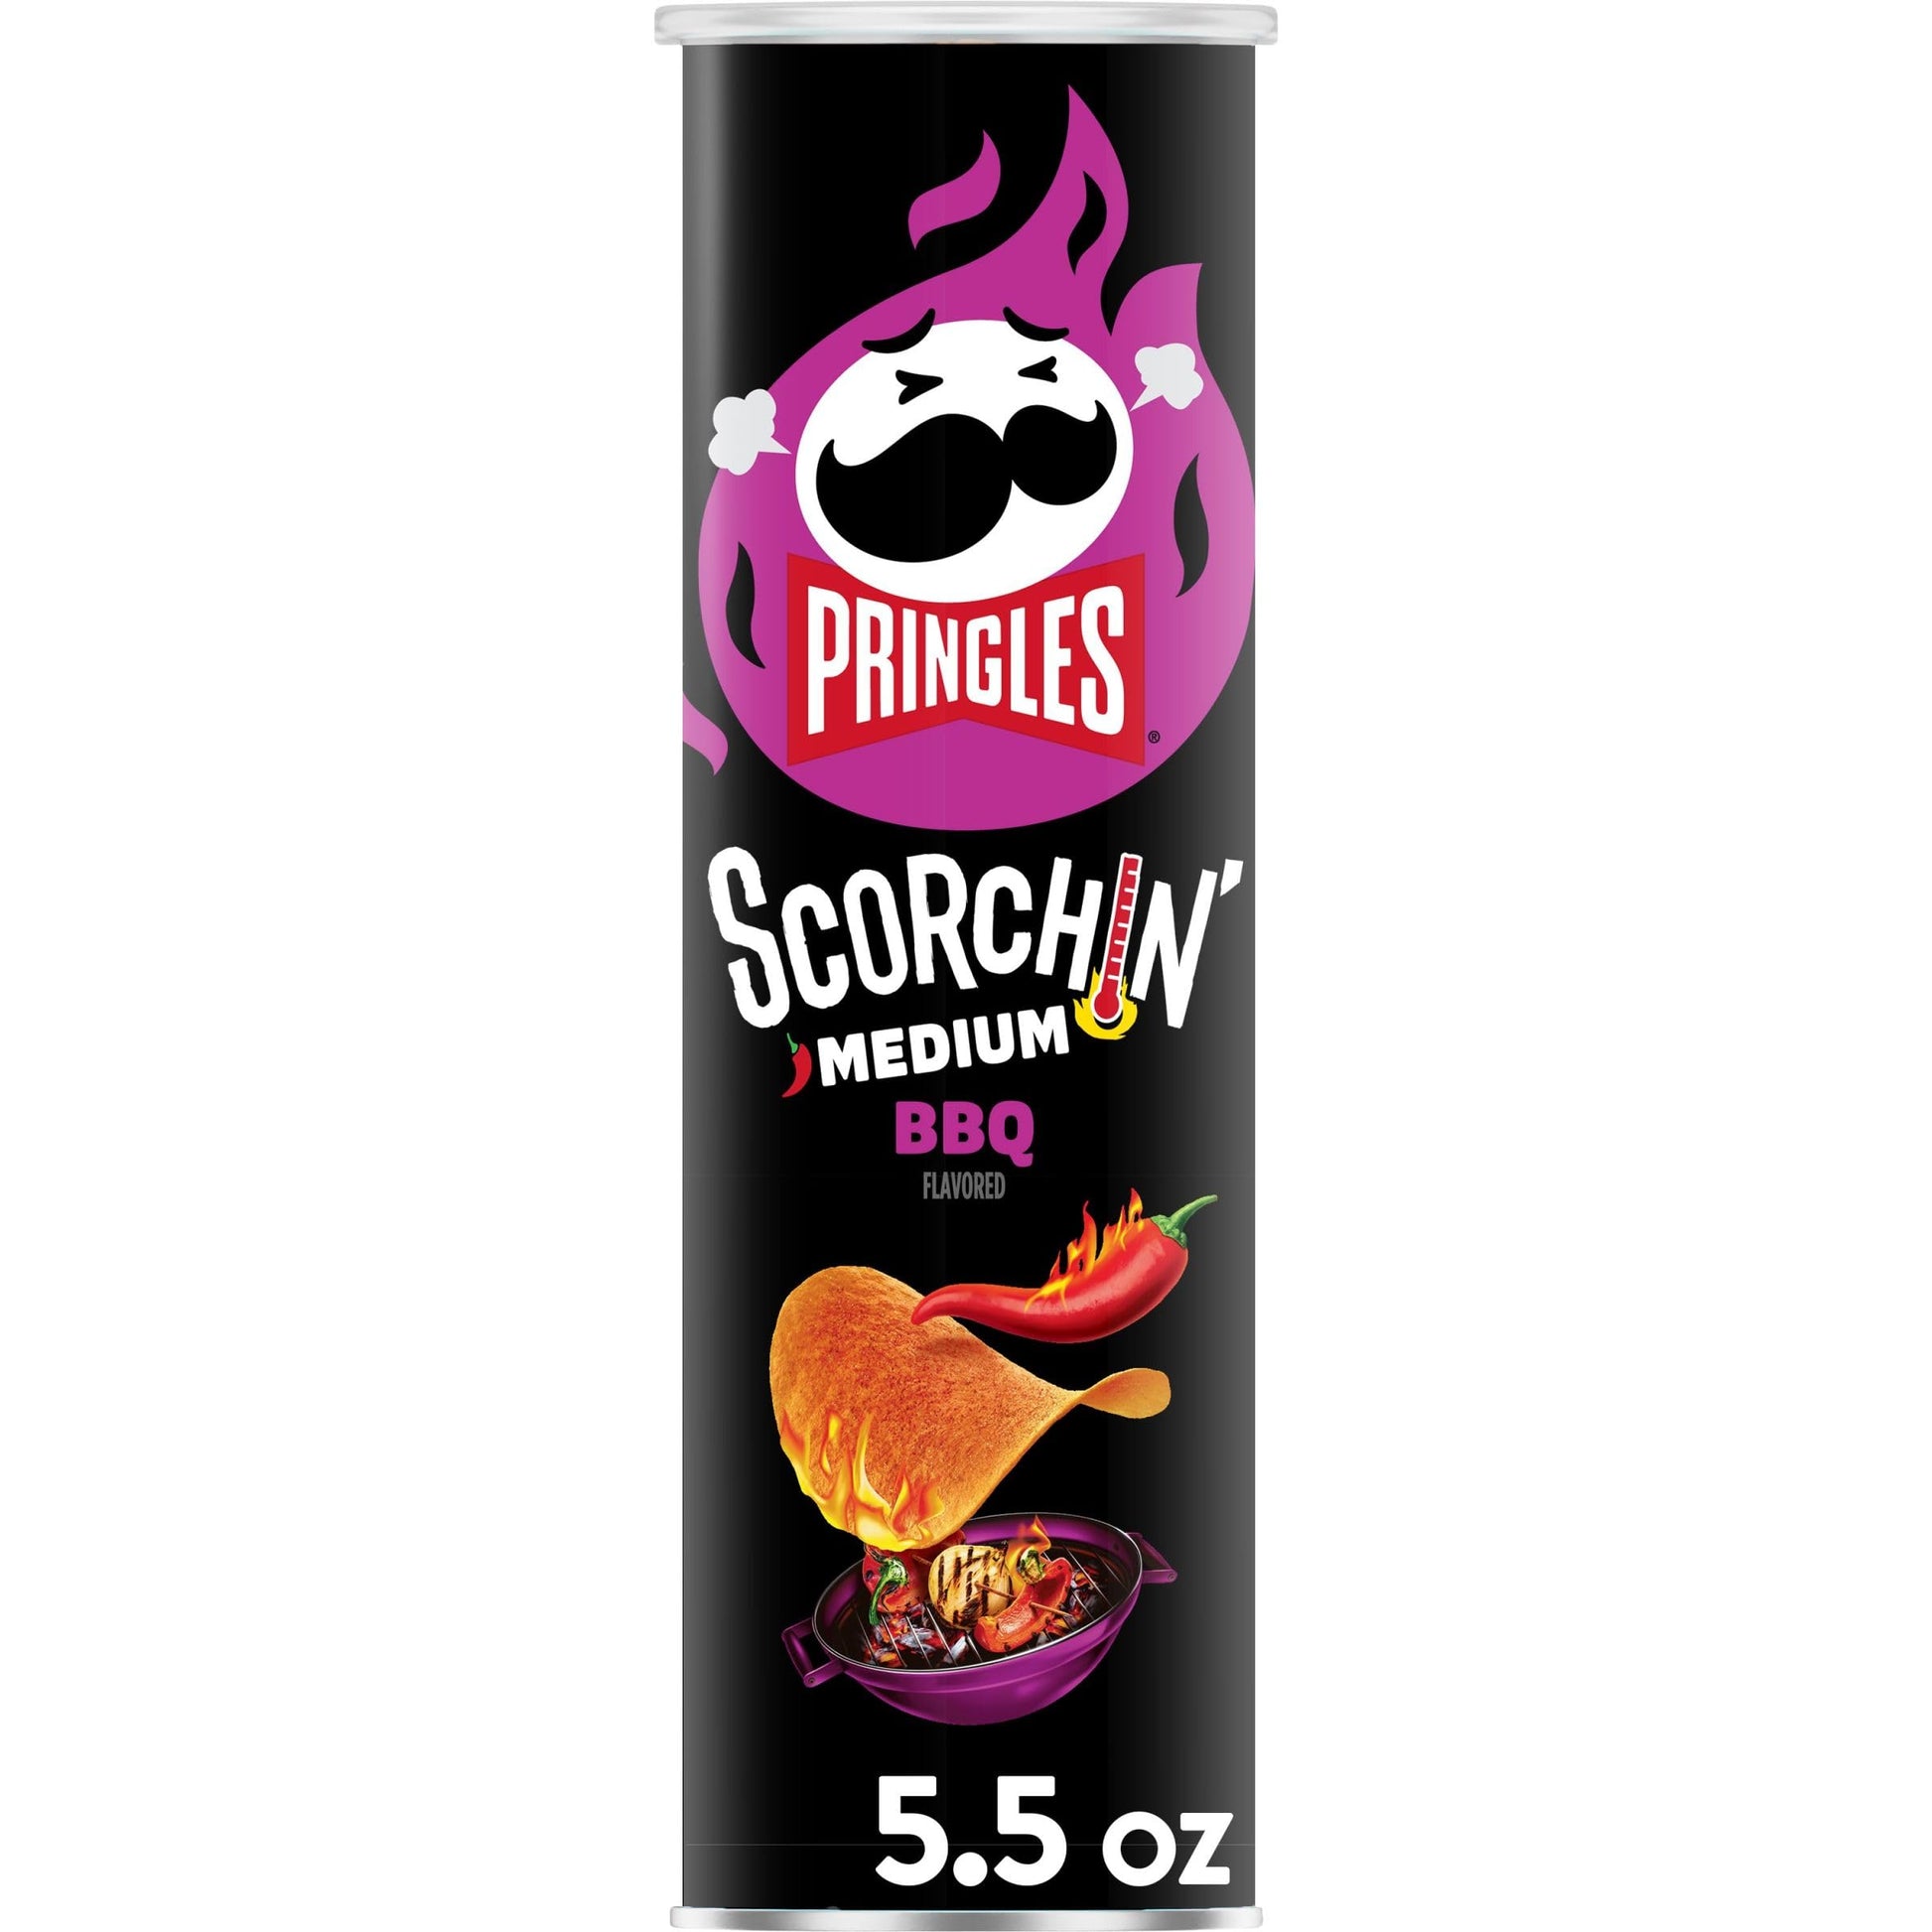 Pringles Scorchin’ BBQ 5.5oz